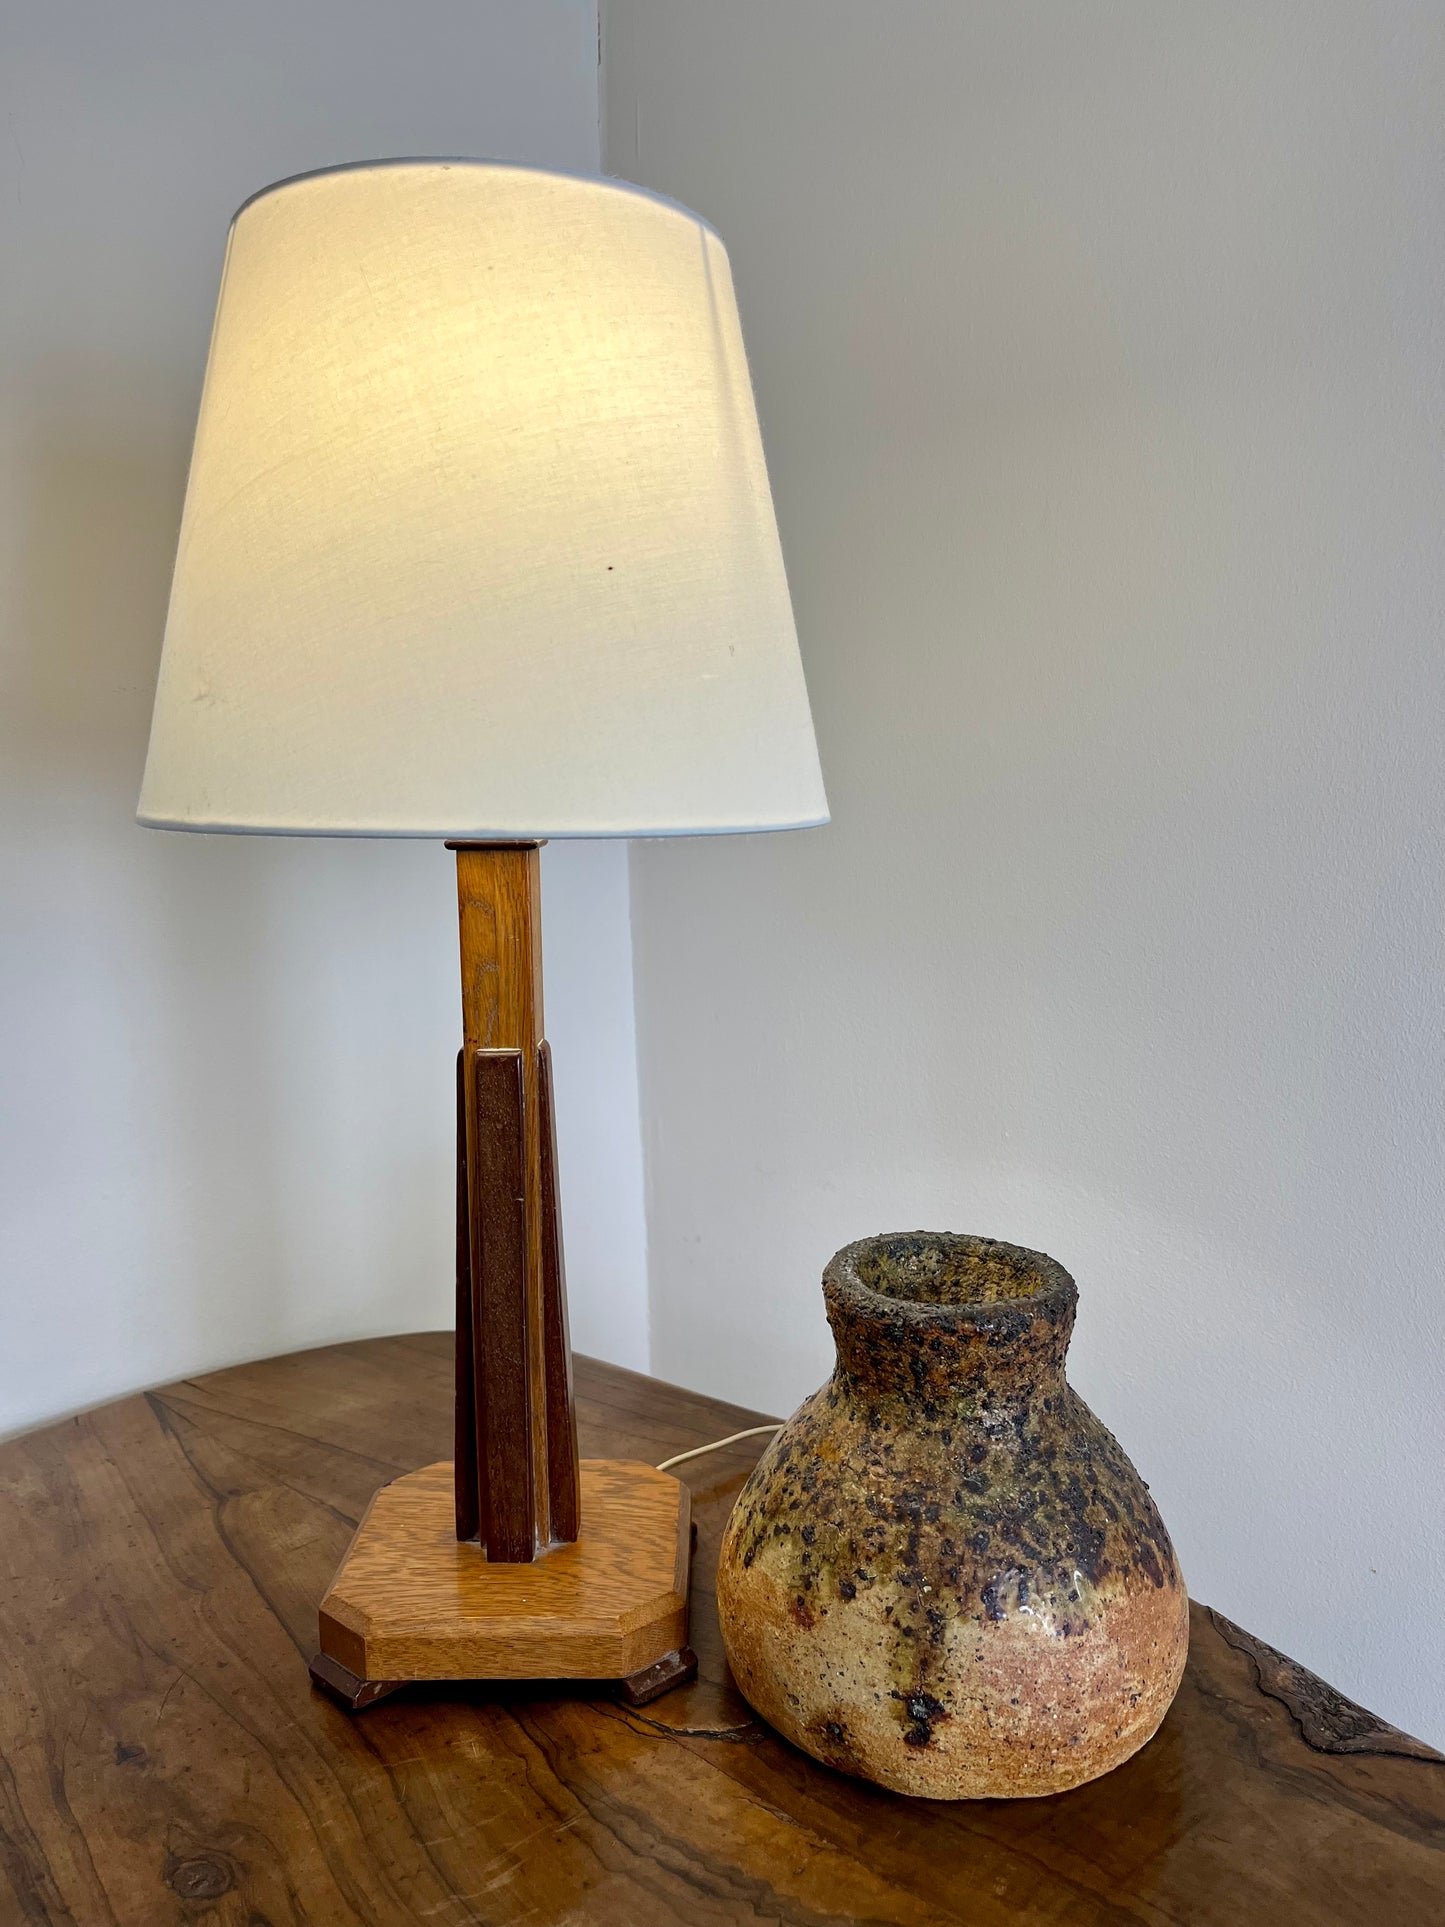 ART DECO TABLE LAMP